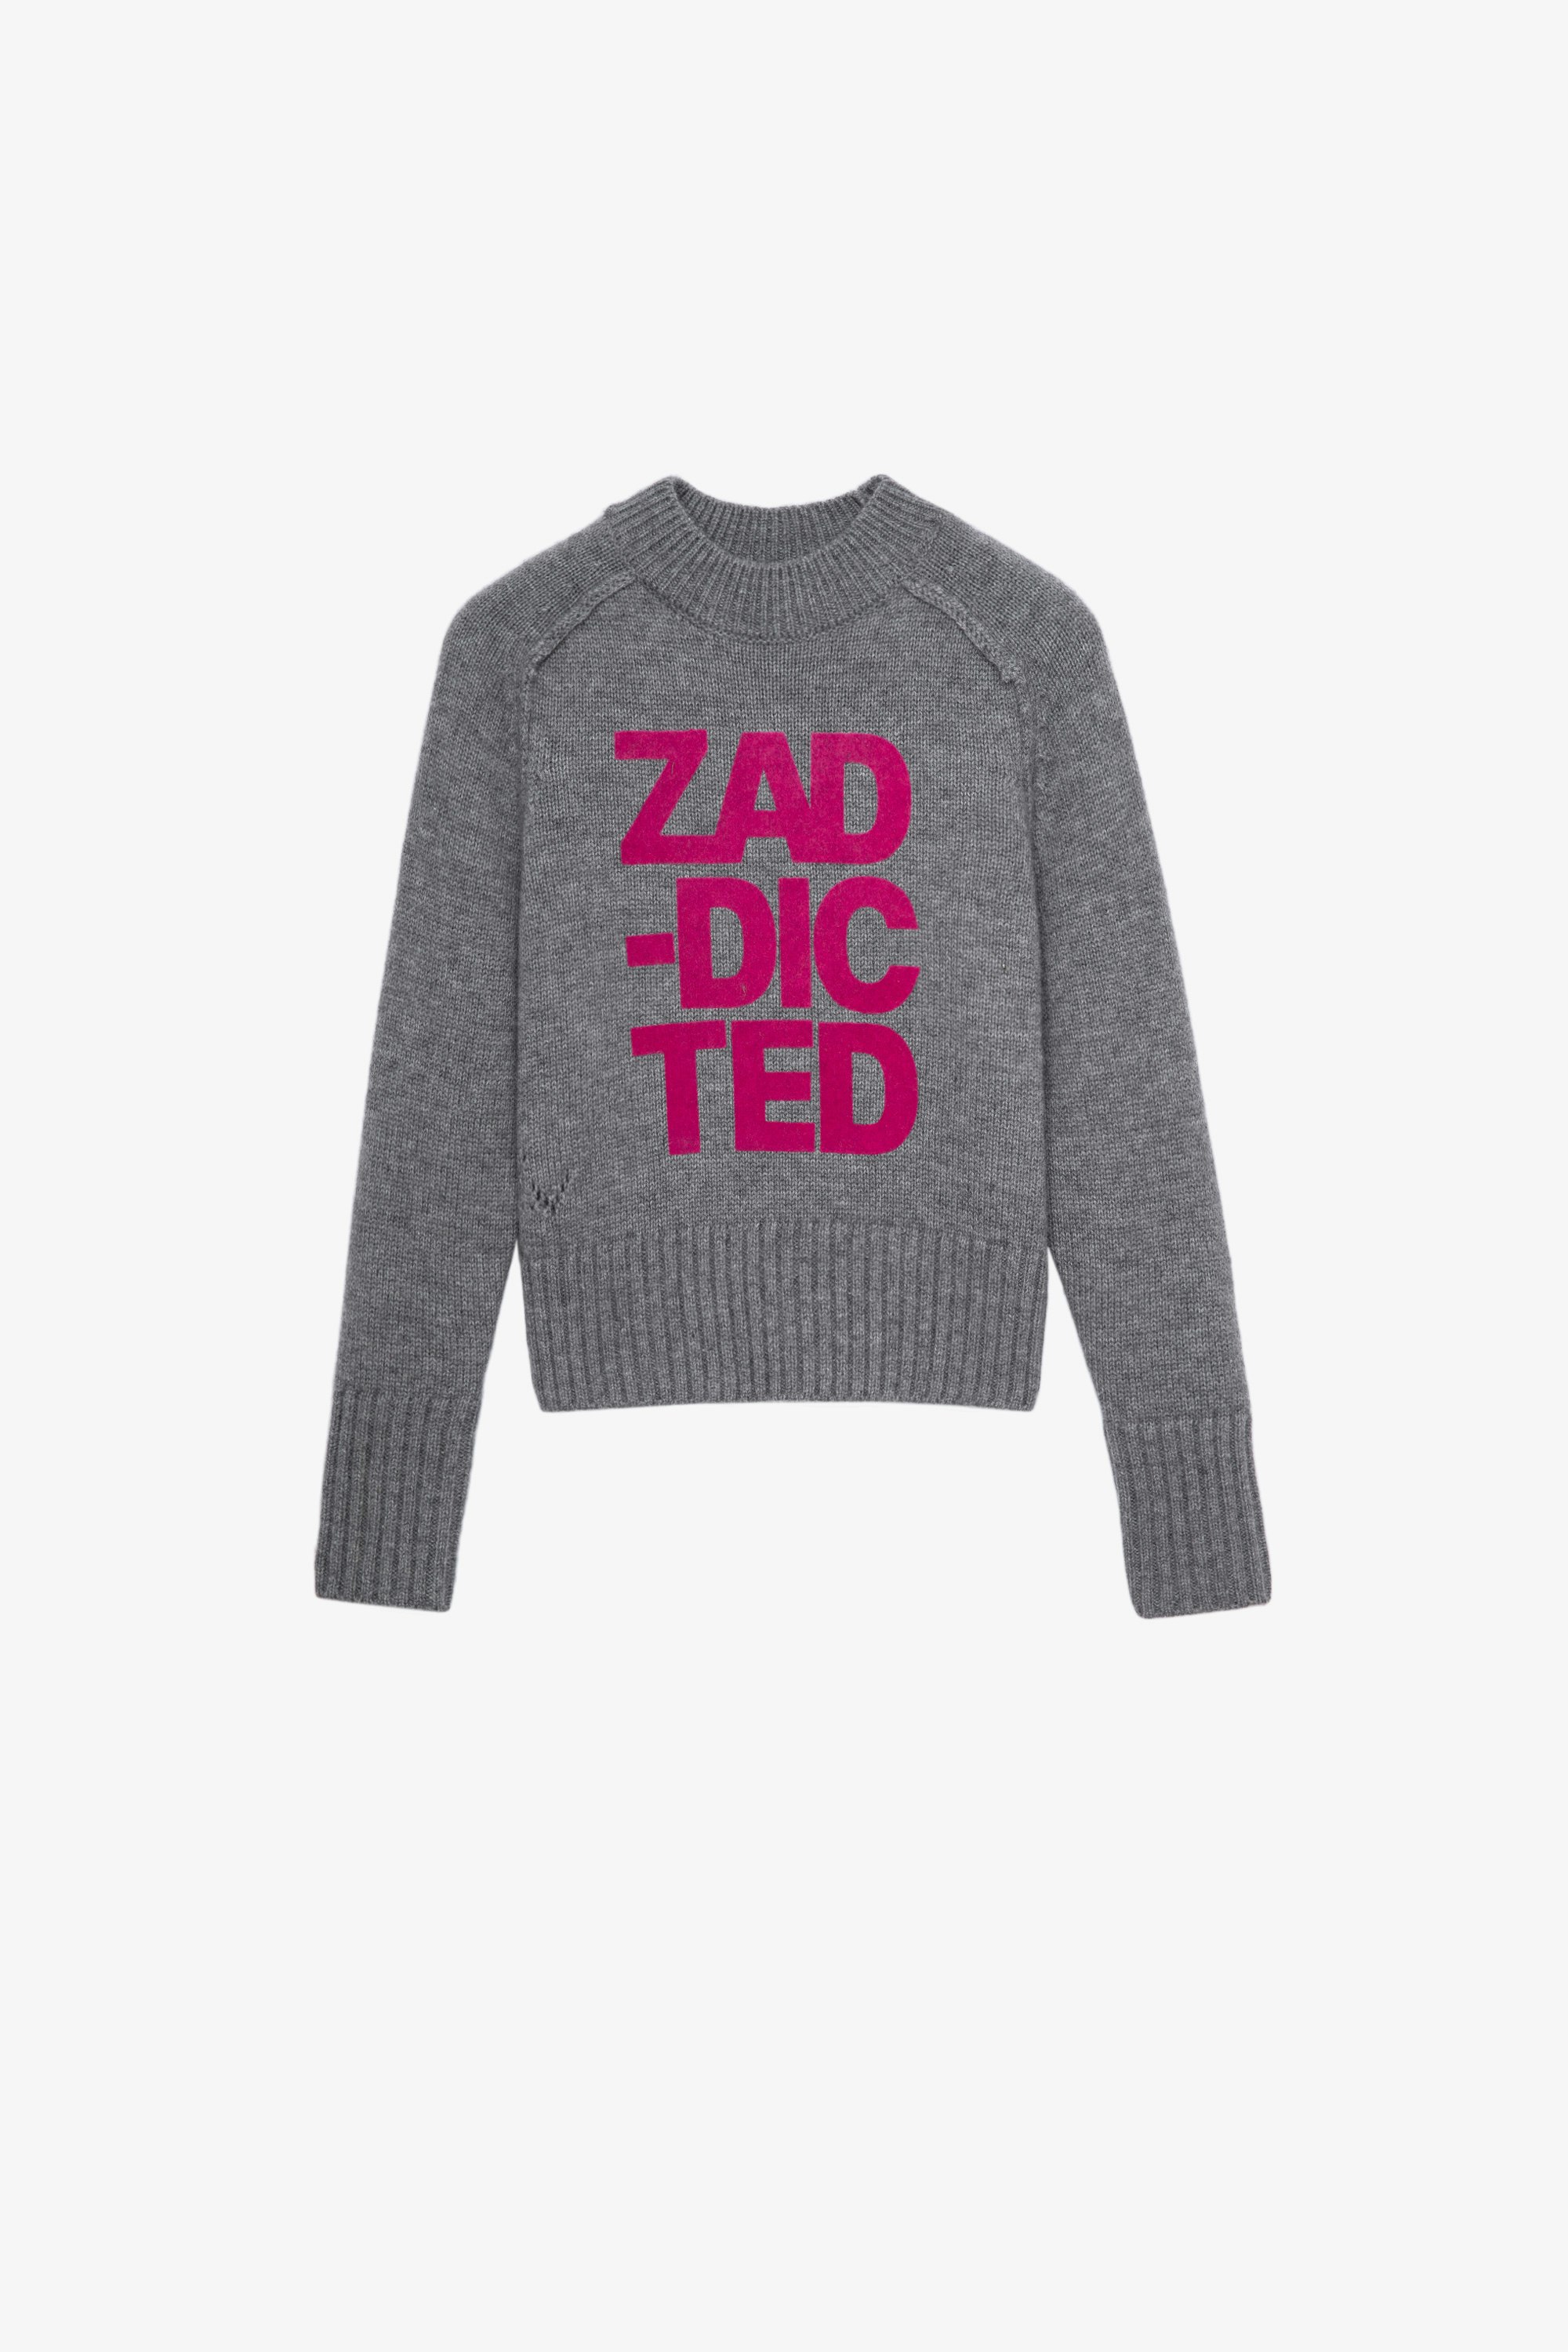 Milan Children’s Jumper Children’s grey knitted turtleneck jumper with contrasting “Zaddicted” mantra 